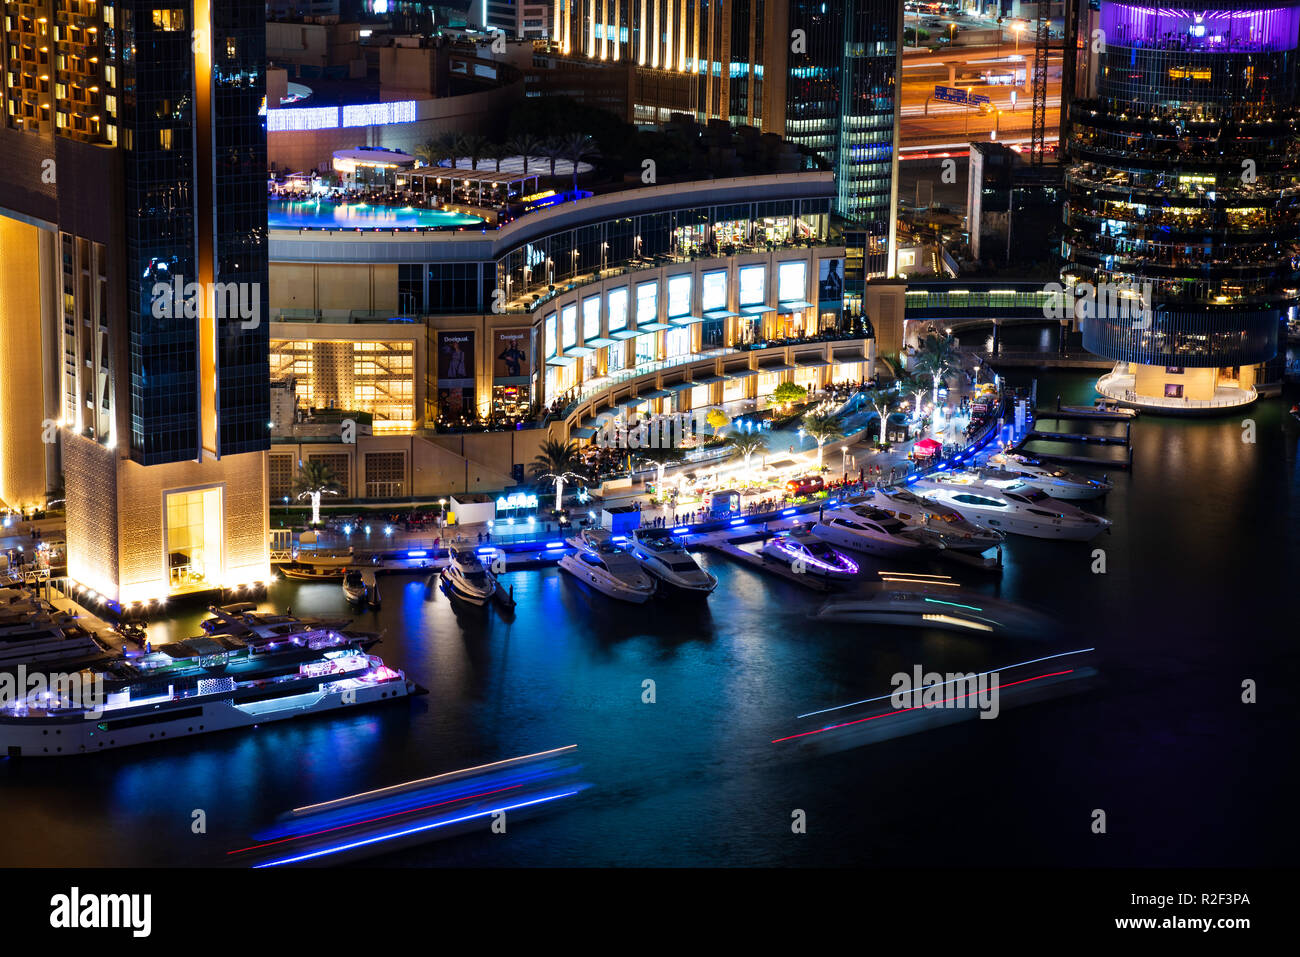 Dubai, United Arab Emirates - November 16, 2018: Dubai Marina mall night view of modern architecture and luxuries environment of famous travel destina Stock Photo